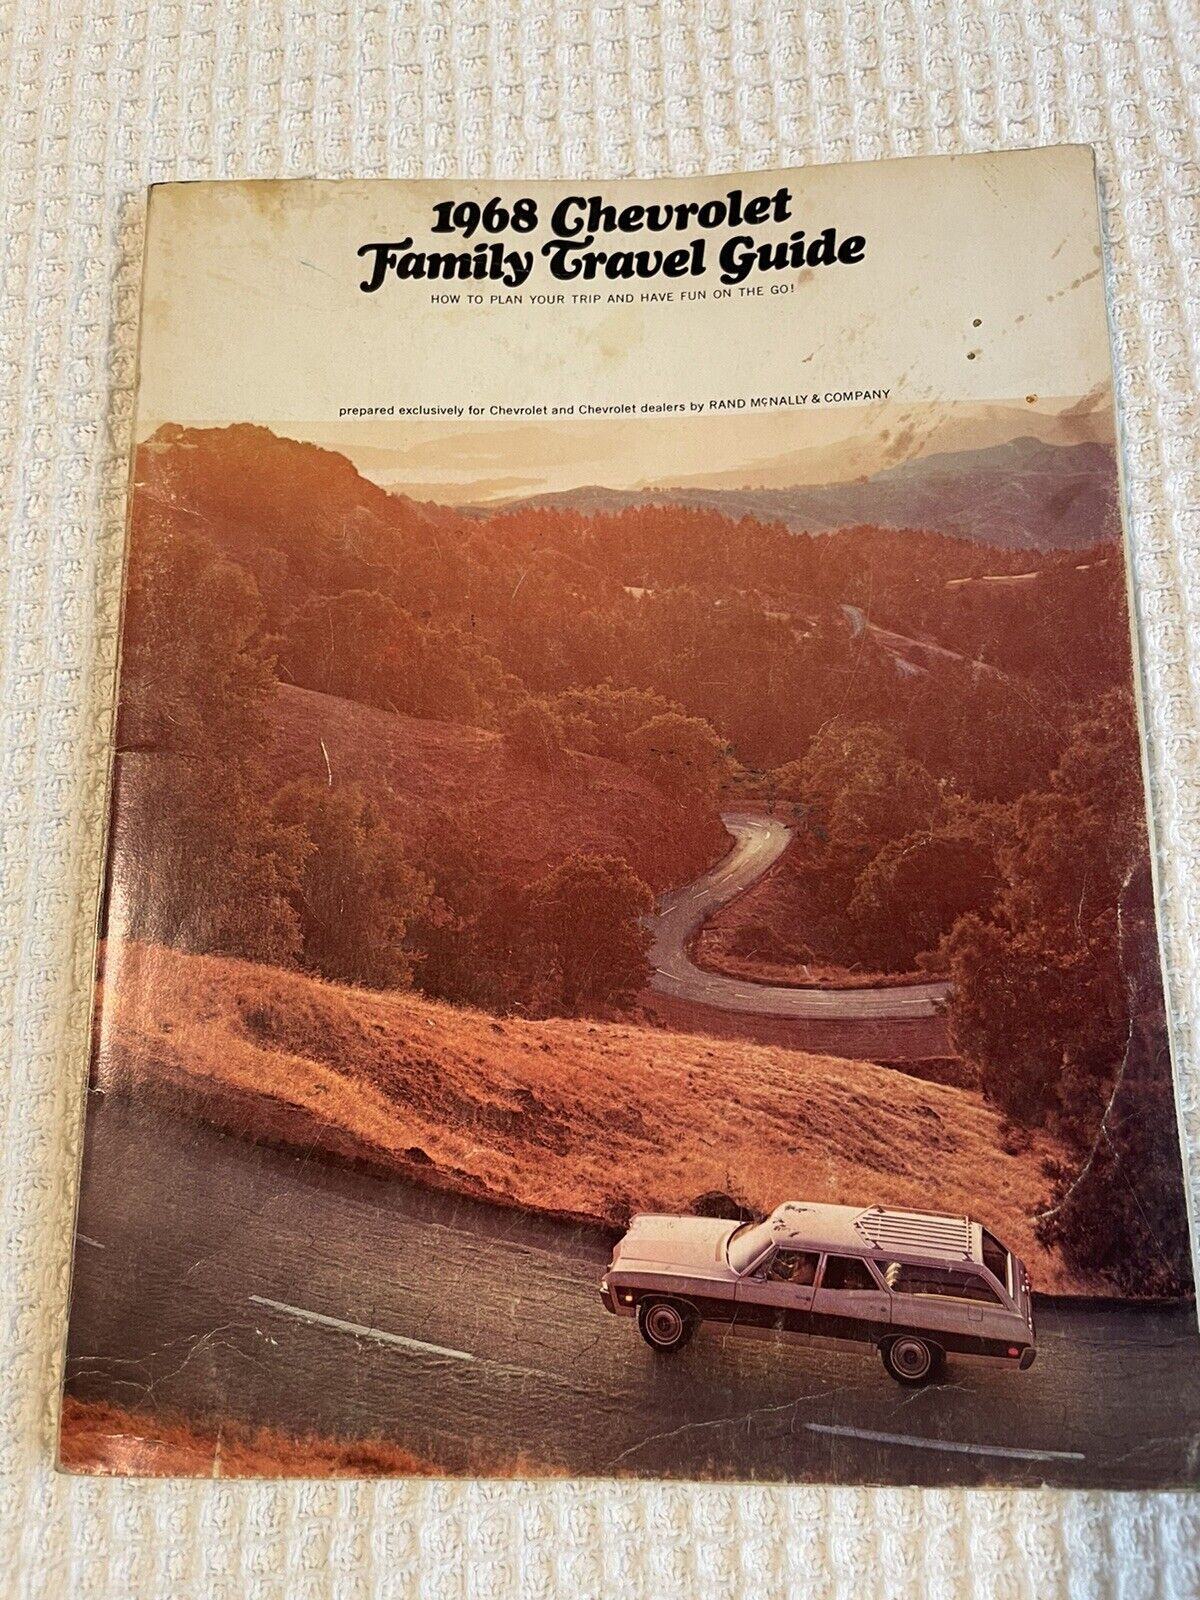 Vintage Chevrolet 1968 Family Travel Guide Original From Dealership